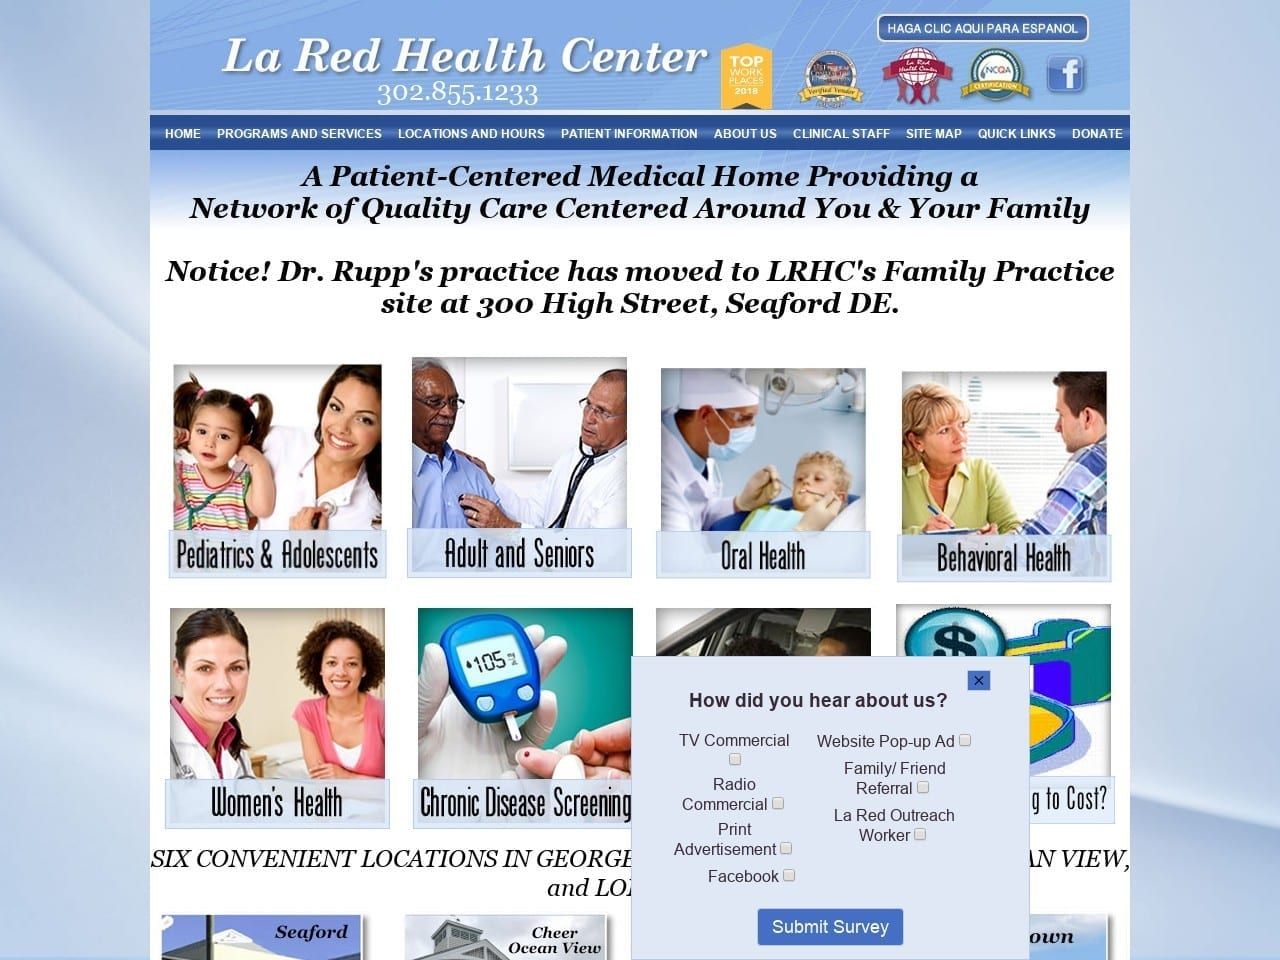 La Red Health Center Website Screenshot from laredhealthcenter.org